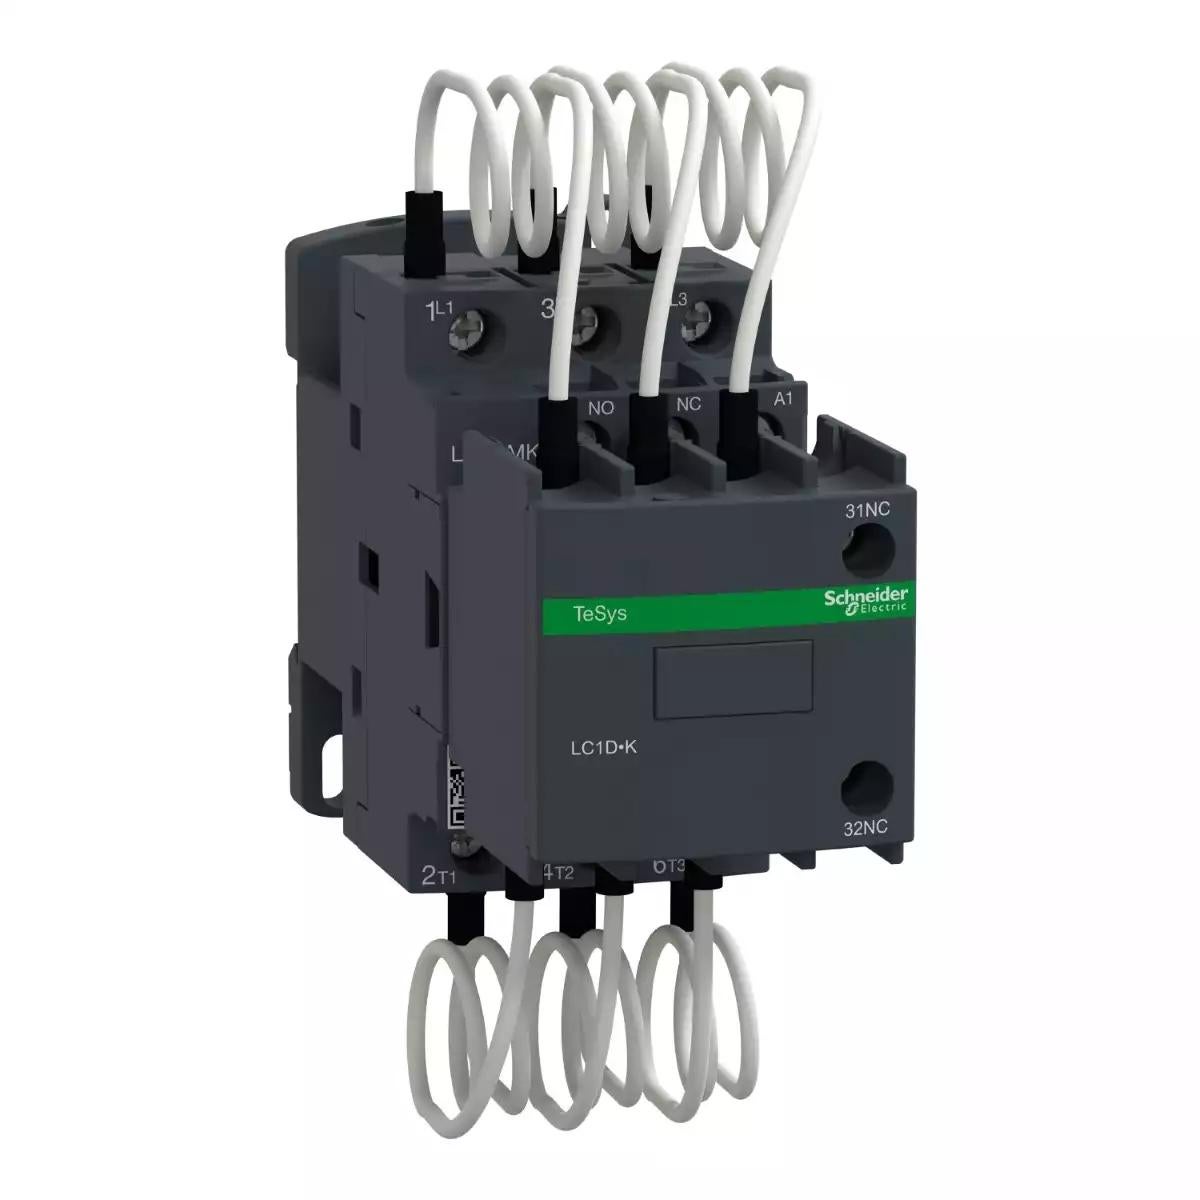 Capacitor contactor, TeSys D, 25 kVAR at 400 V/50 Hz, coil 24 V AC 50/60 Hz